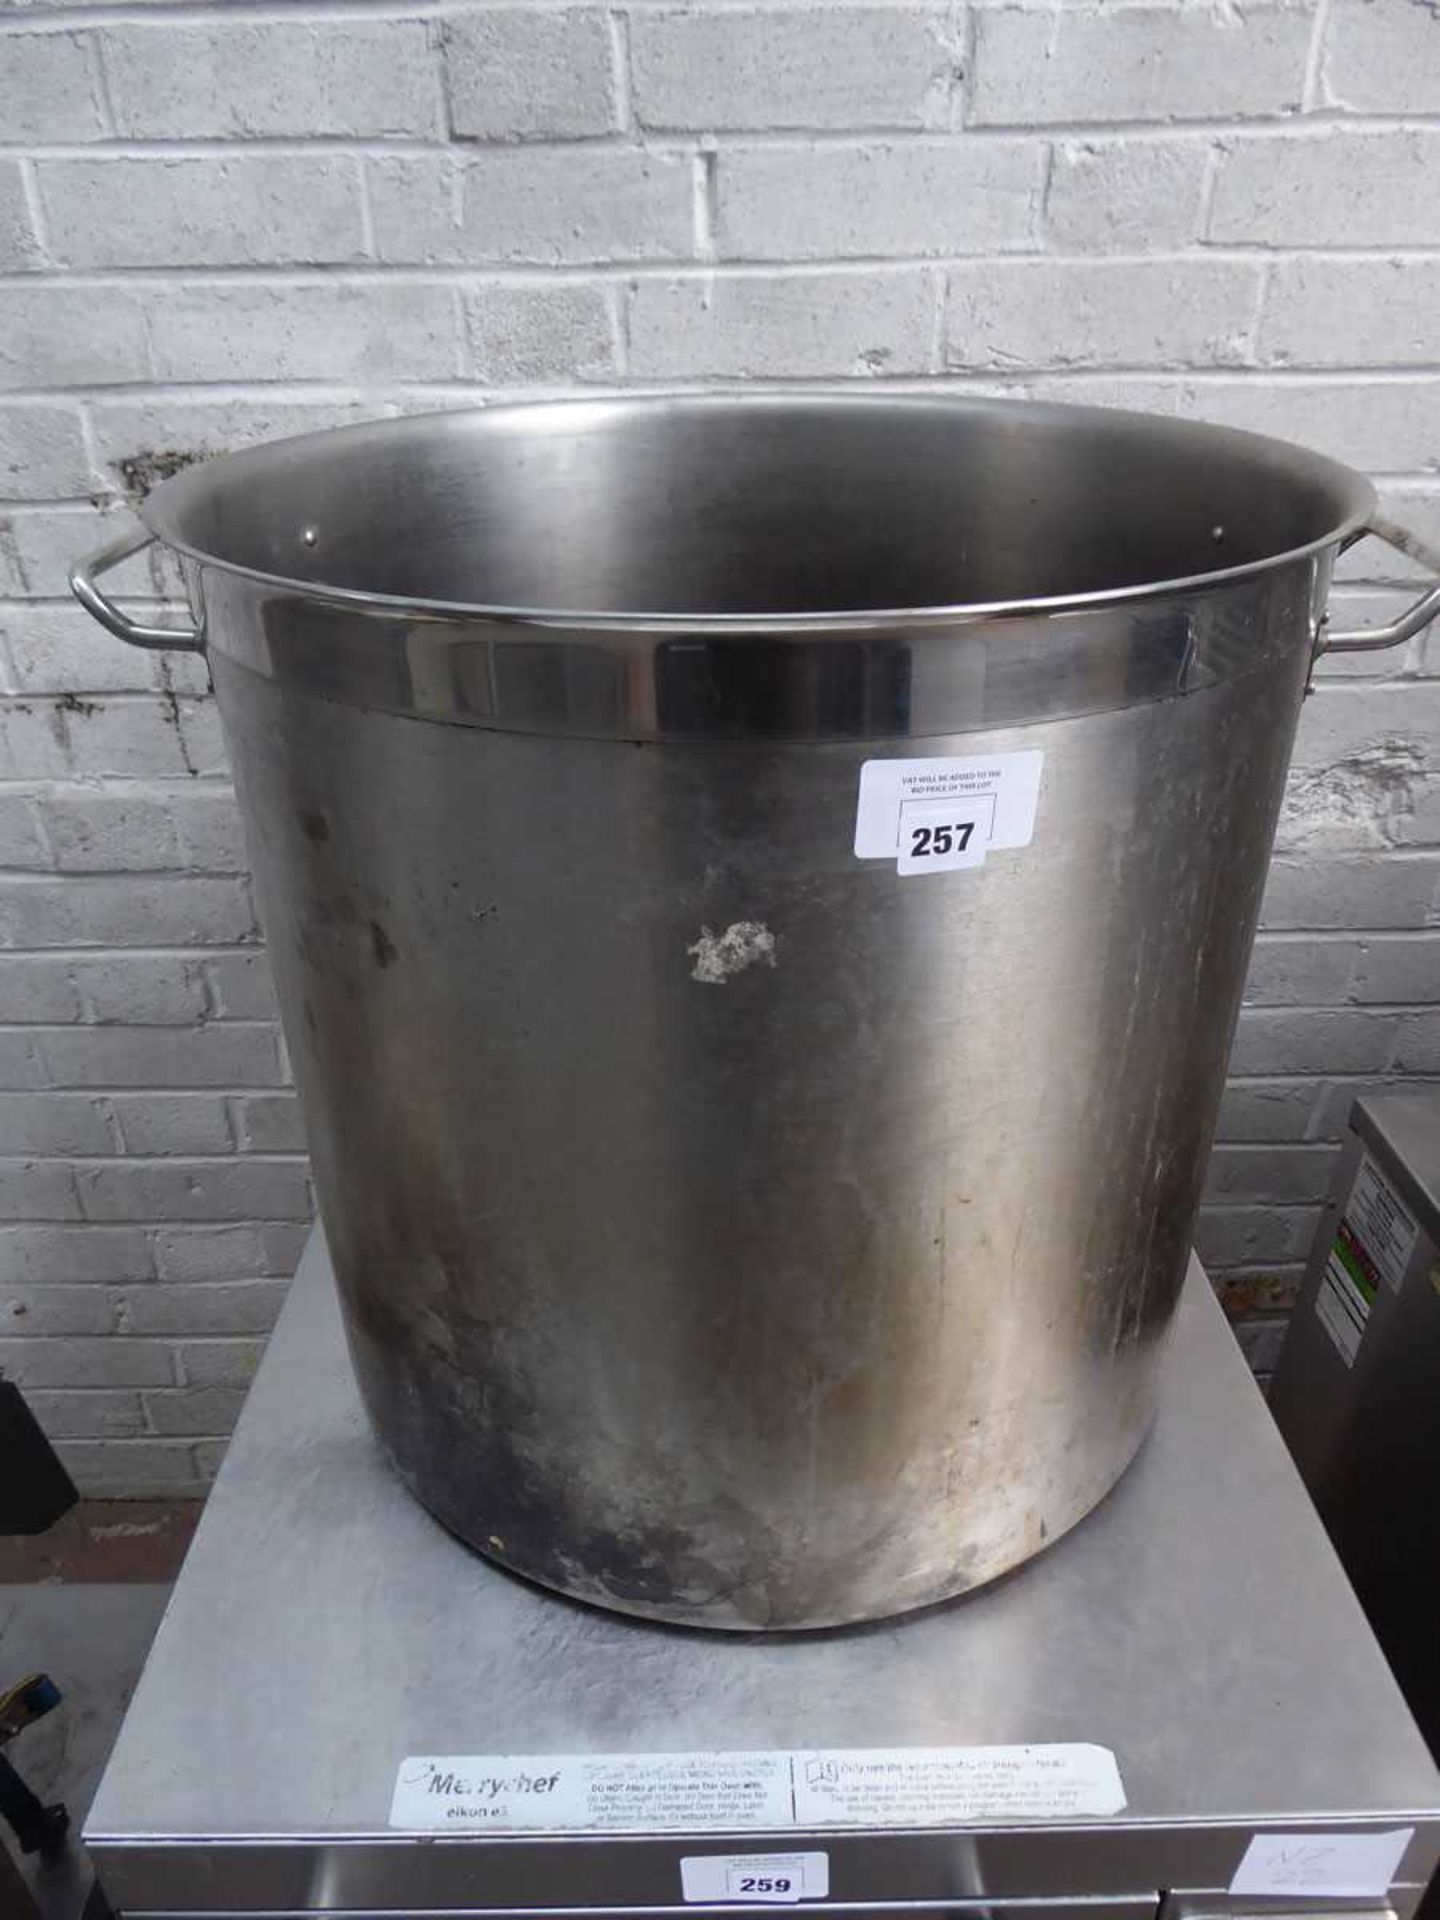 +VAT 52cm diameter stainless steel cooking pot with 2 handles